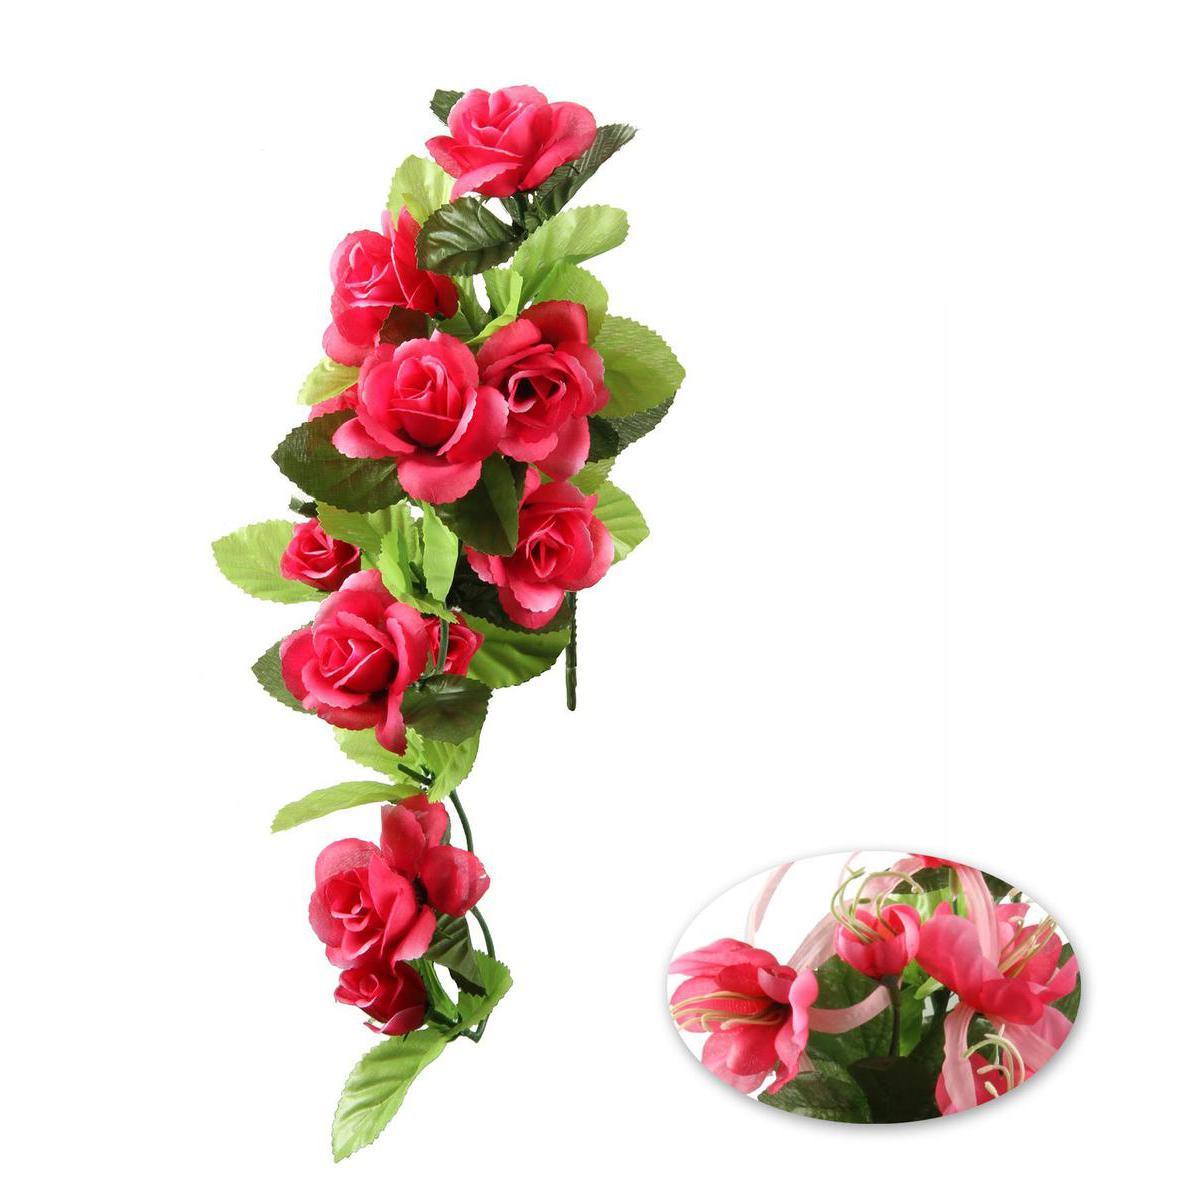 Chute fleurie rose ou passion - Plastique, Polyester -  34 cm - Rose